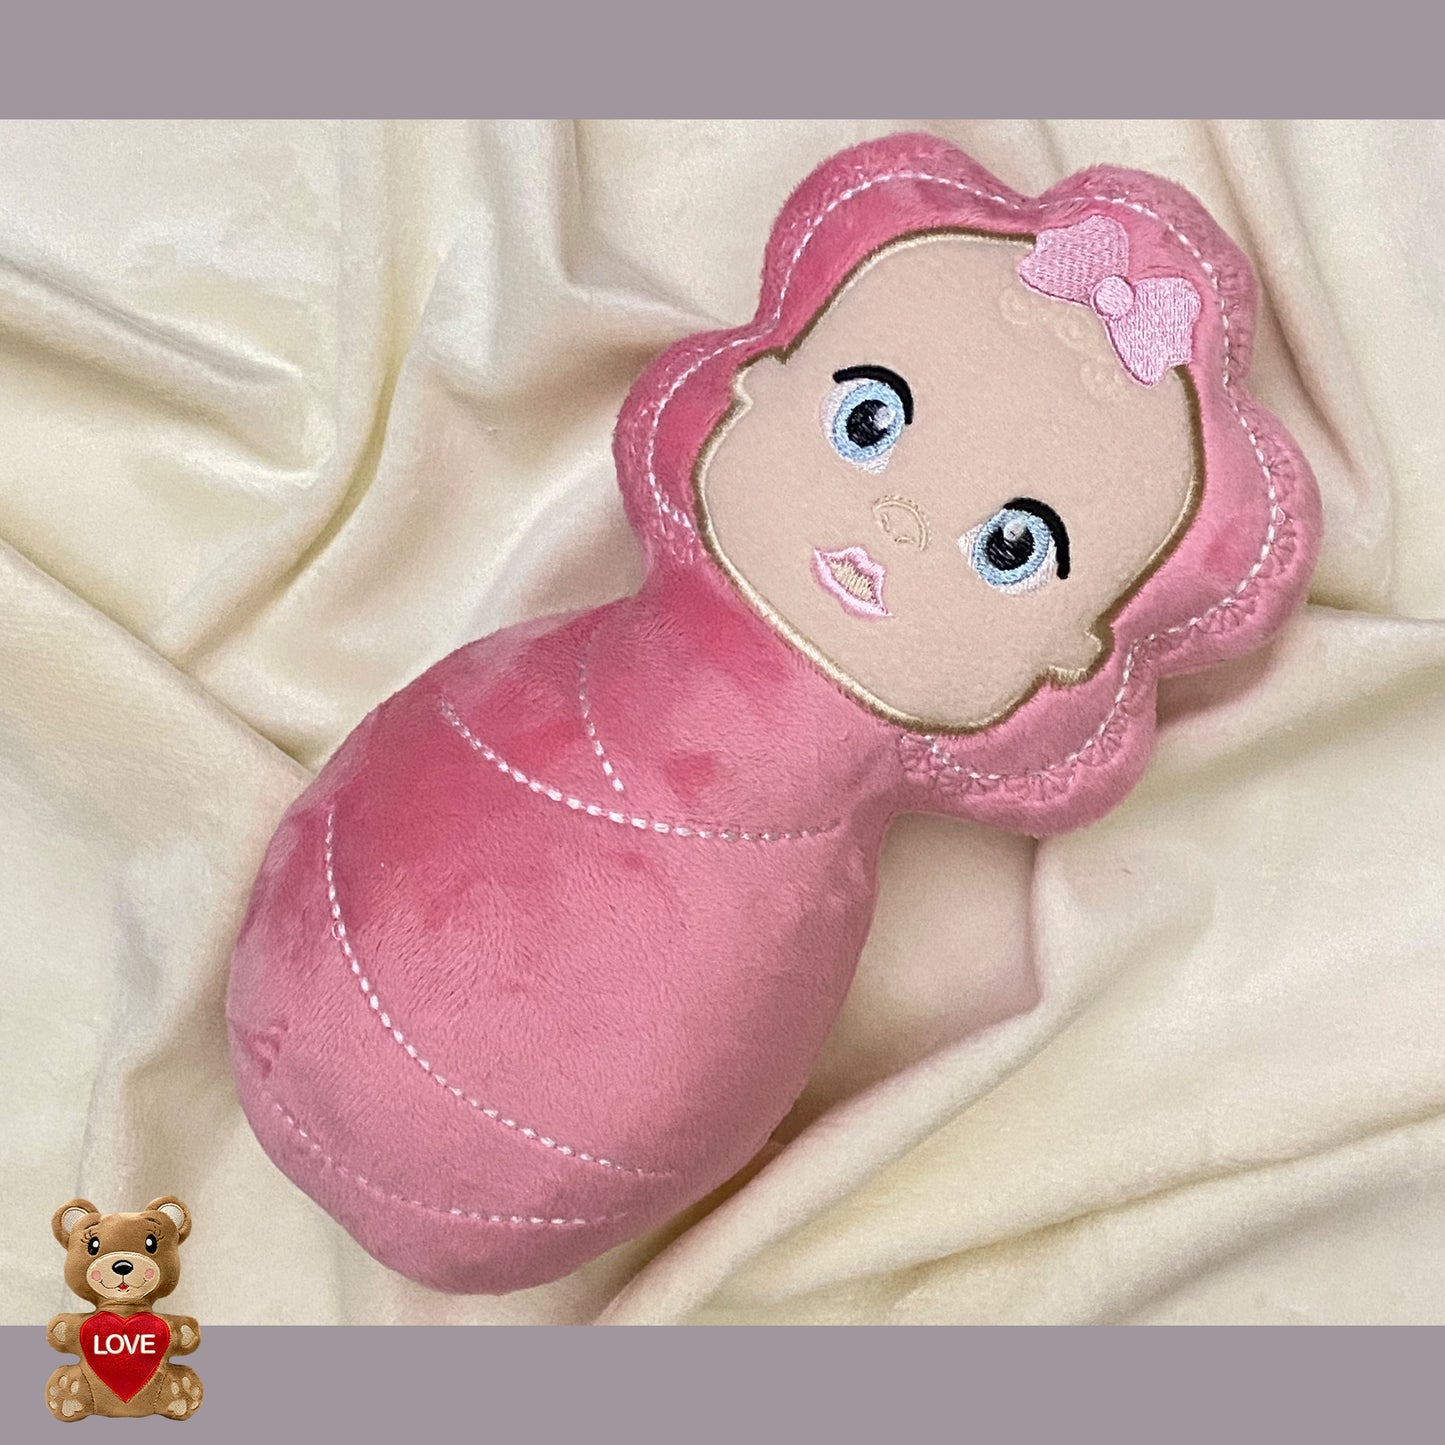 Personalised stuffed plush dolls for Kids